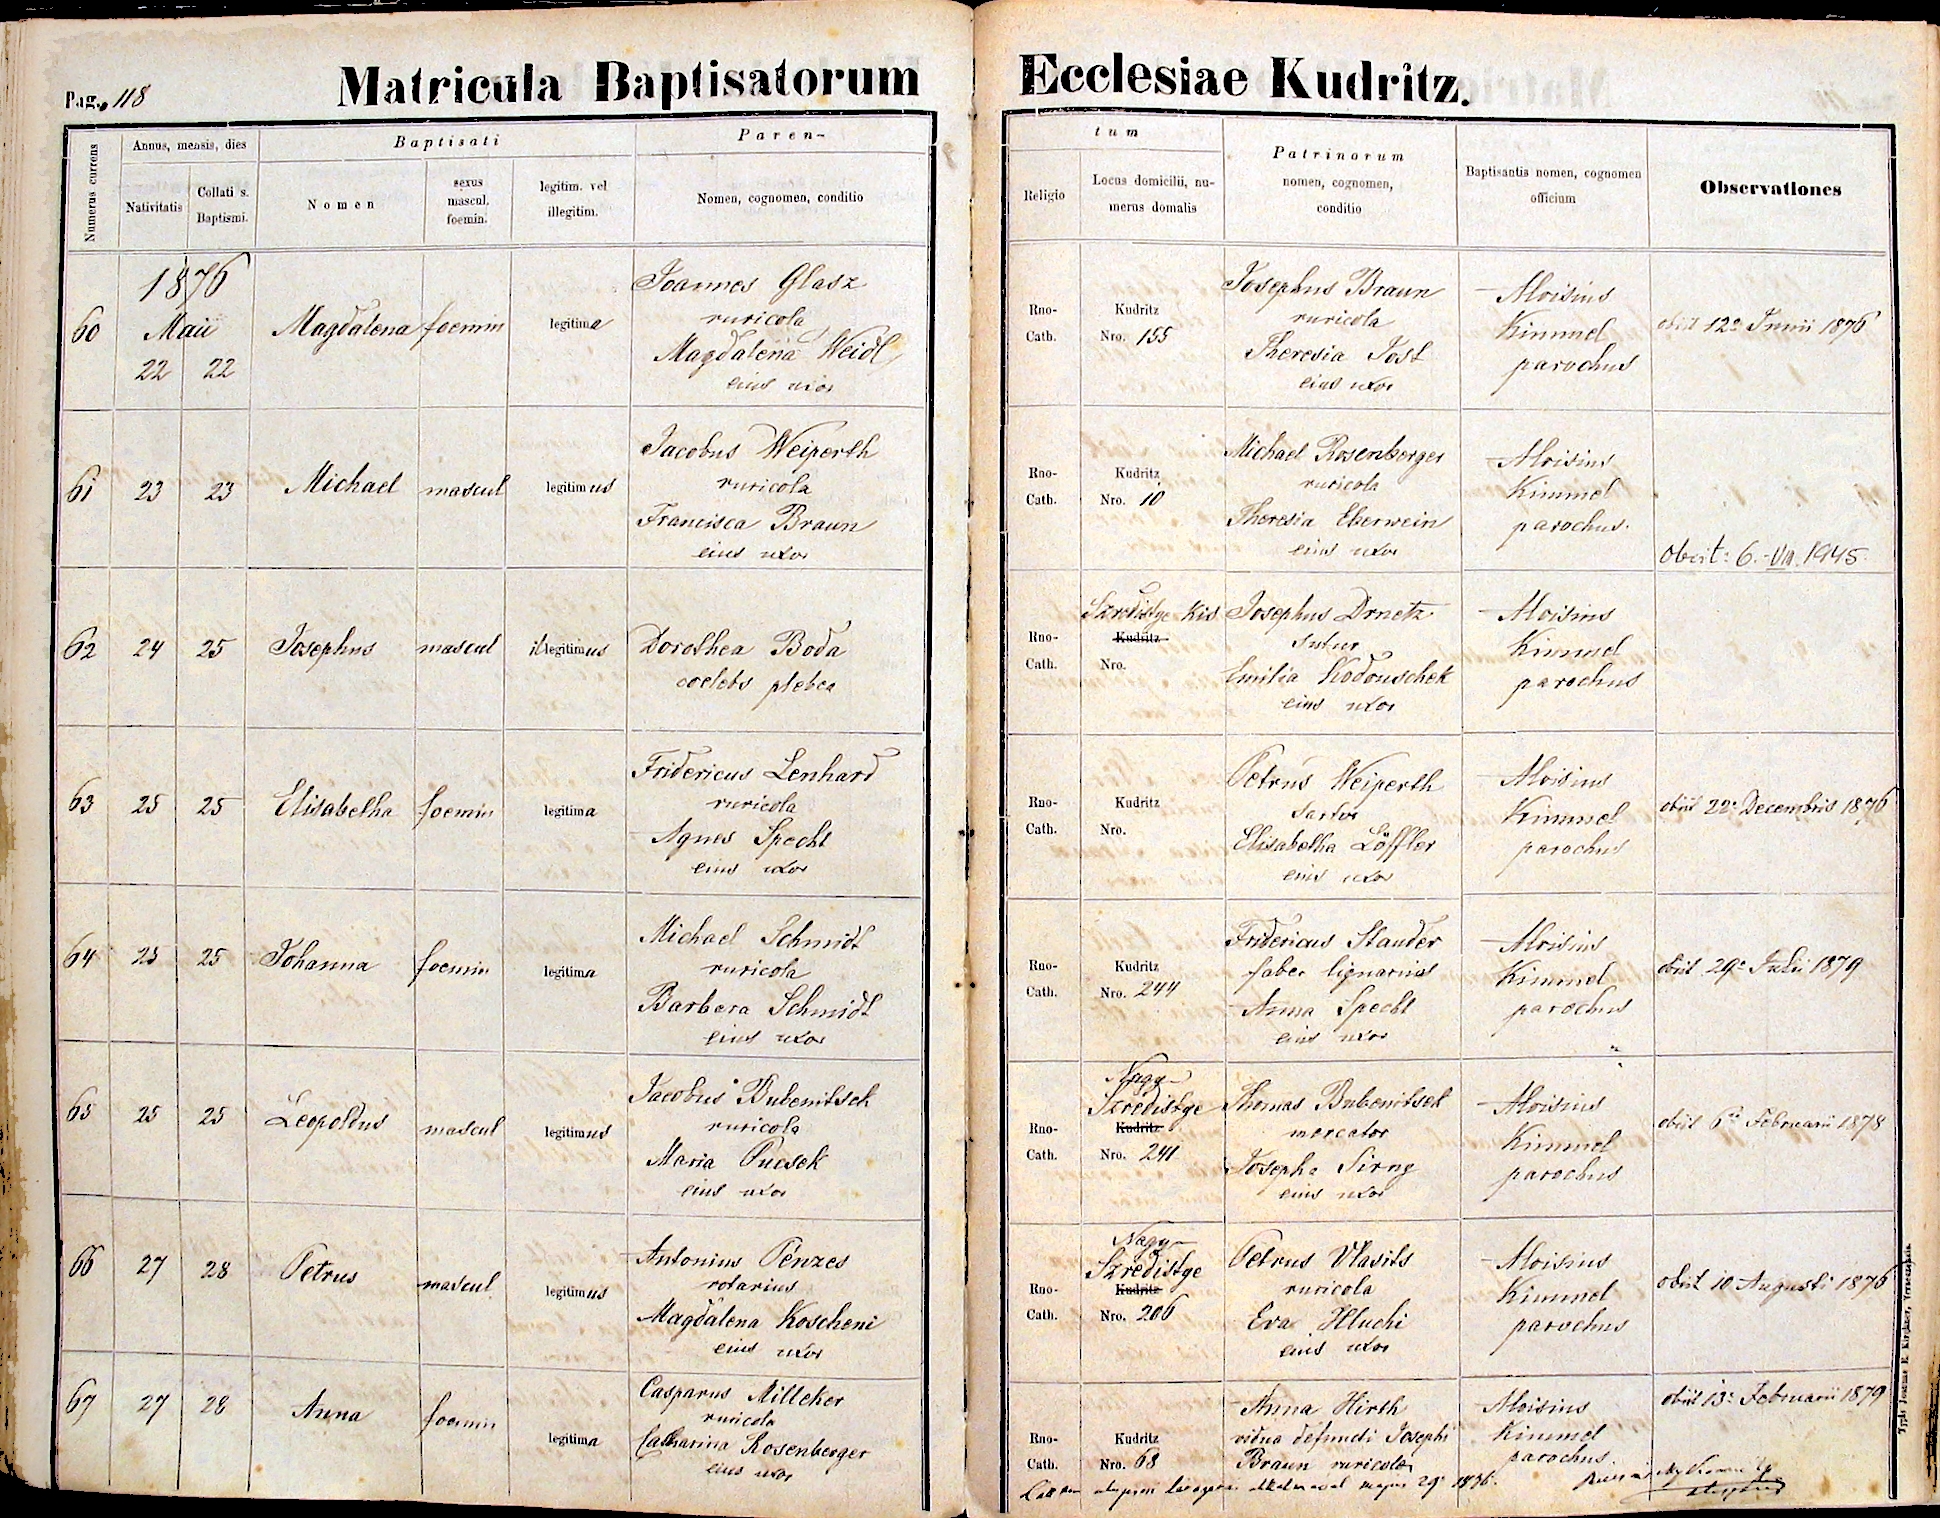 images/church_records/BIRTHS/1870-1879B/1876/118